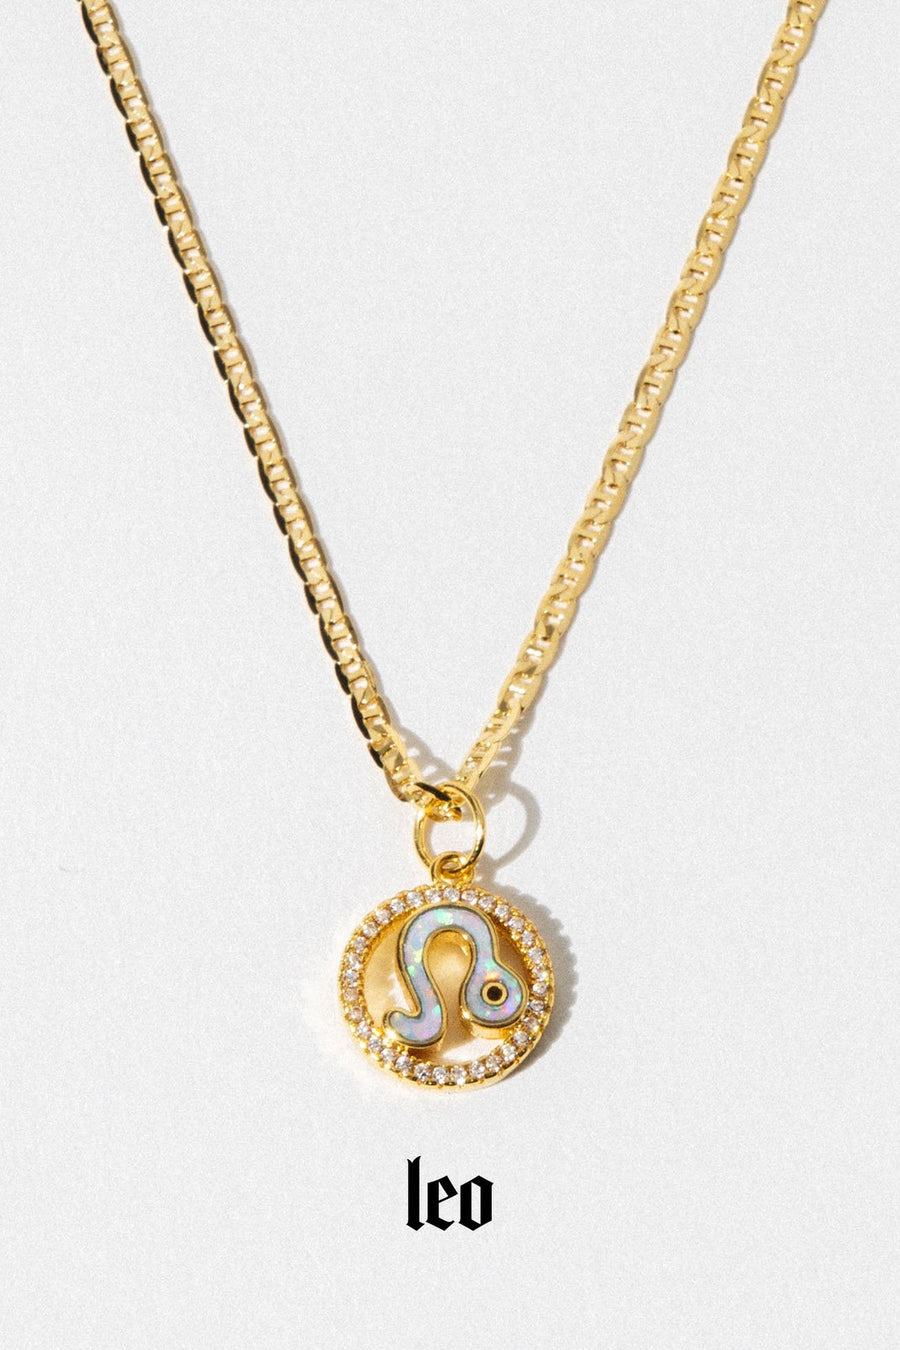 Dona Italia Jewelry Leo / Gold / 18 Inches Cosmic Opal Zodiac Necklace